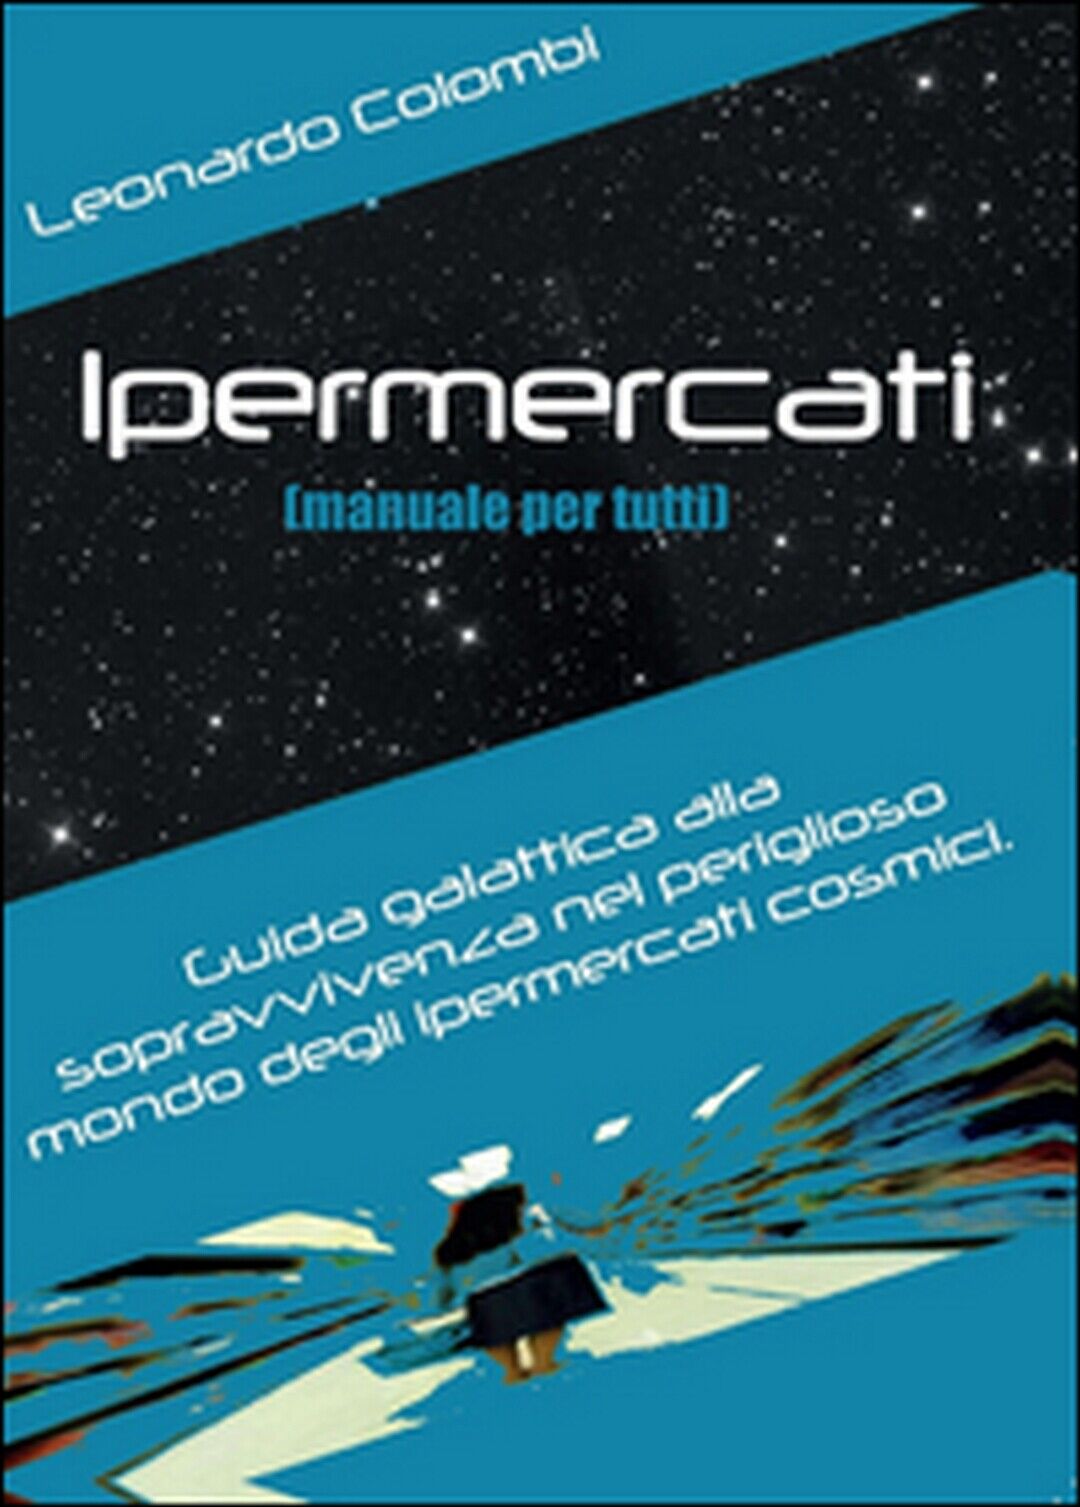 Ipermercati (manuale per tutti)  di Leonardo Colombi,  2014,  Youcanprint